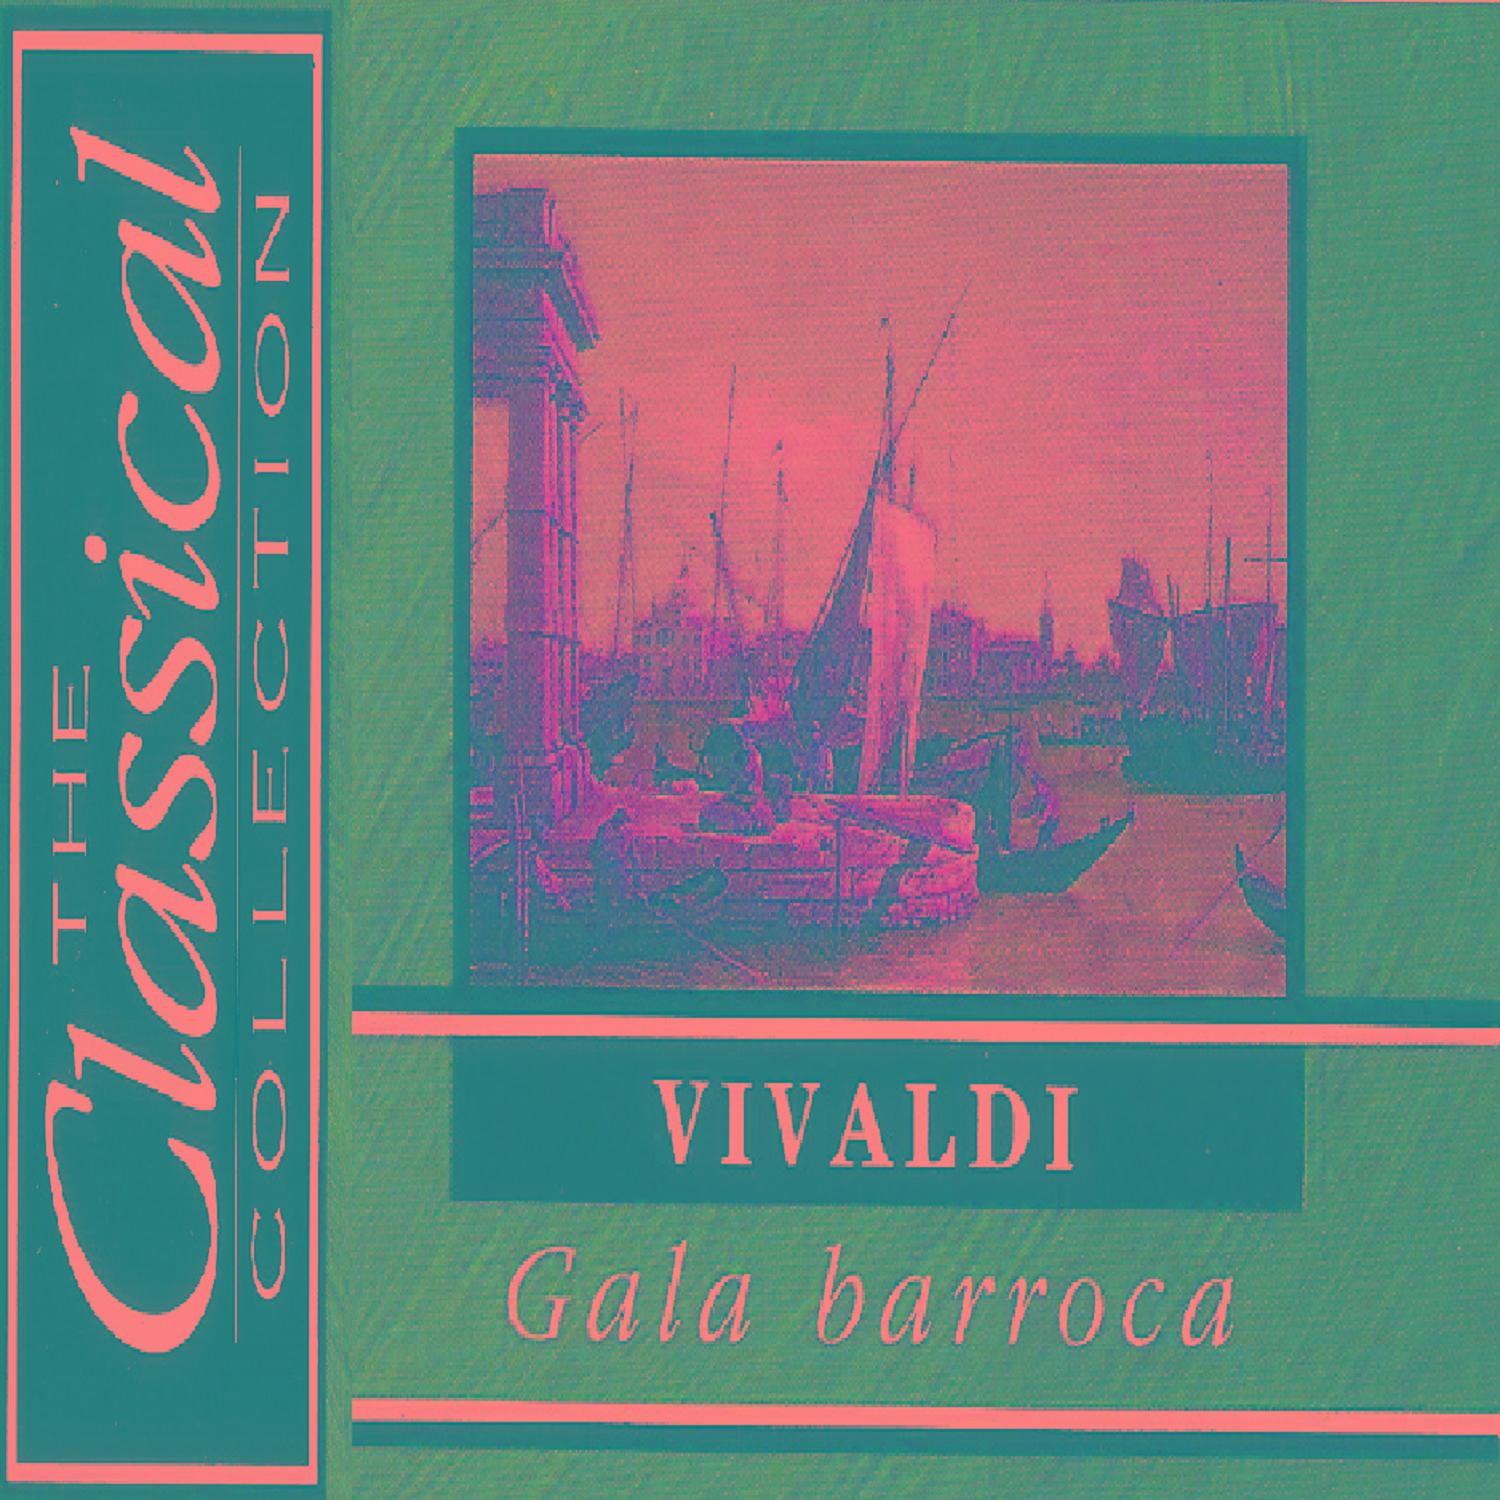 The Classical Collection - Vivaldi - Gala barroca